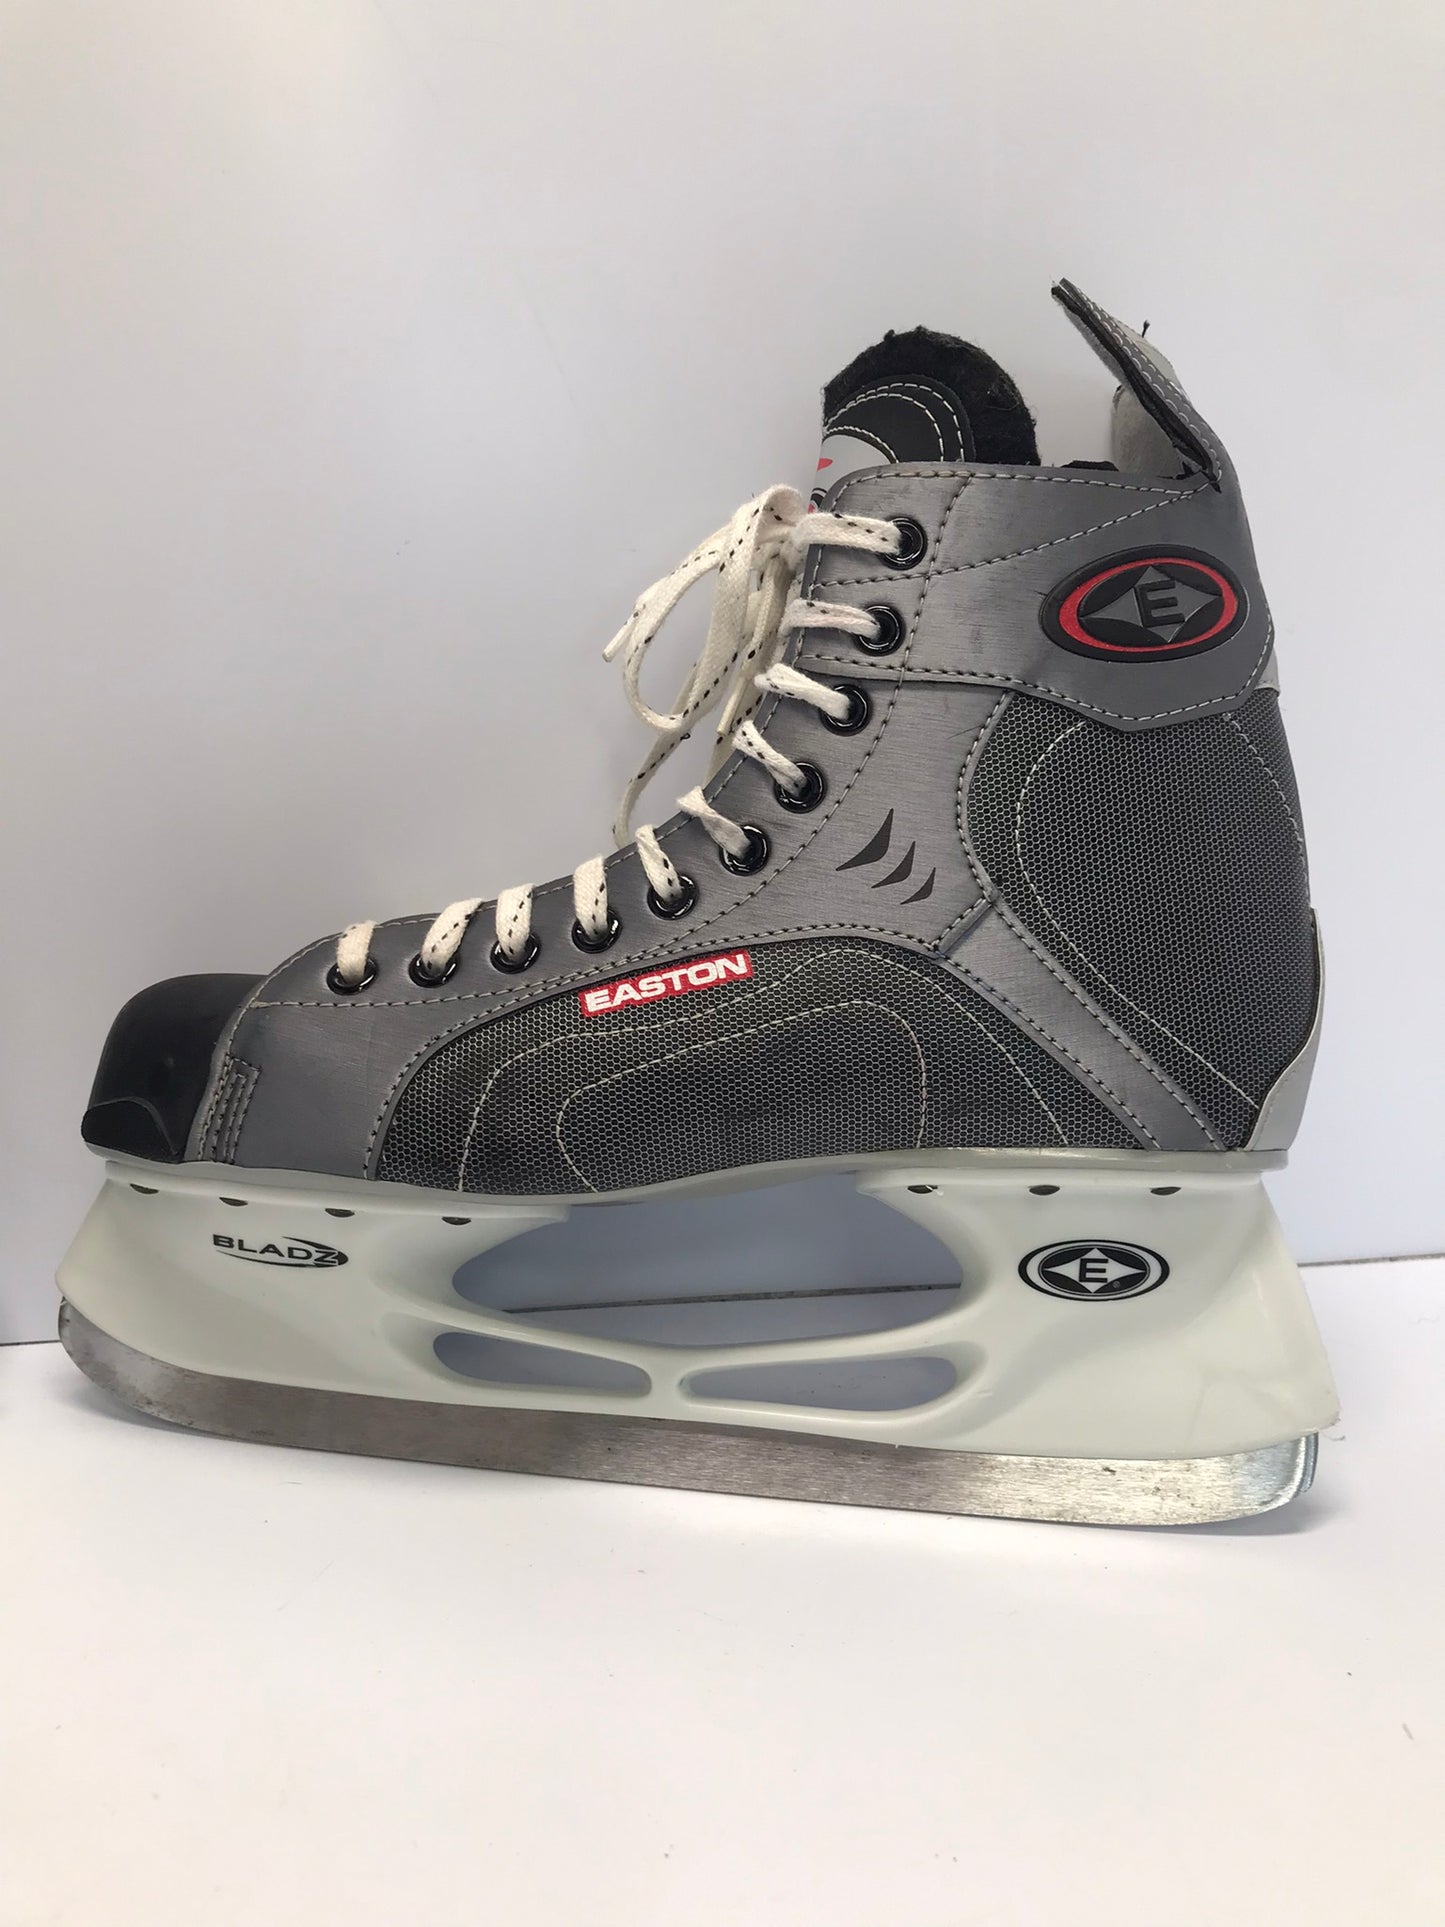 Hockey Skates Men's Size 11 Shoe 9.5 Skate Size Easton Like New